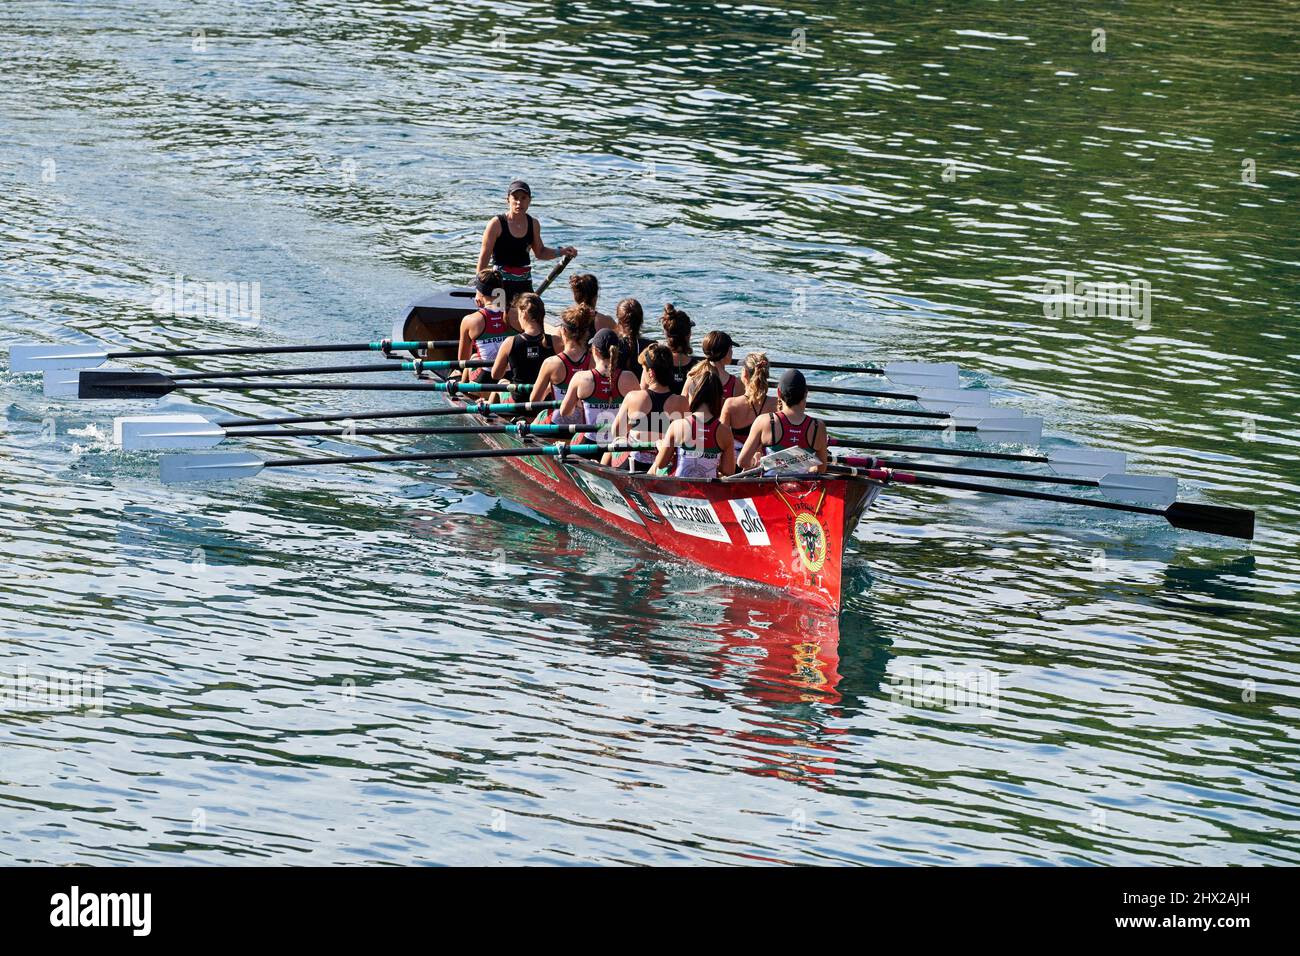 Traineras Regatta, women's modality, Urumea River, Donostia, San Sebastian, Gipuzkoa, Basque Country, Spain, Europe. Stock Photo